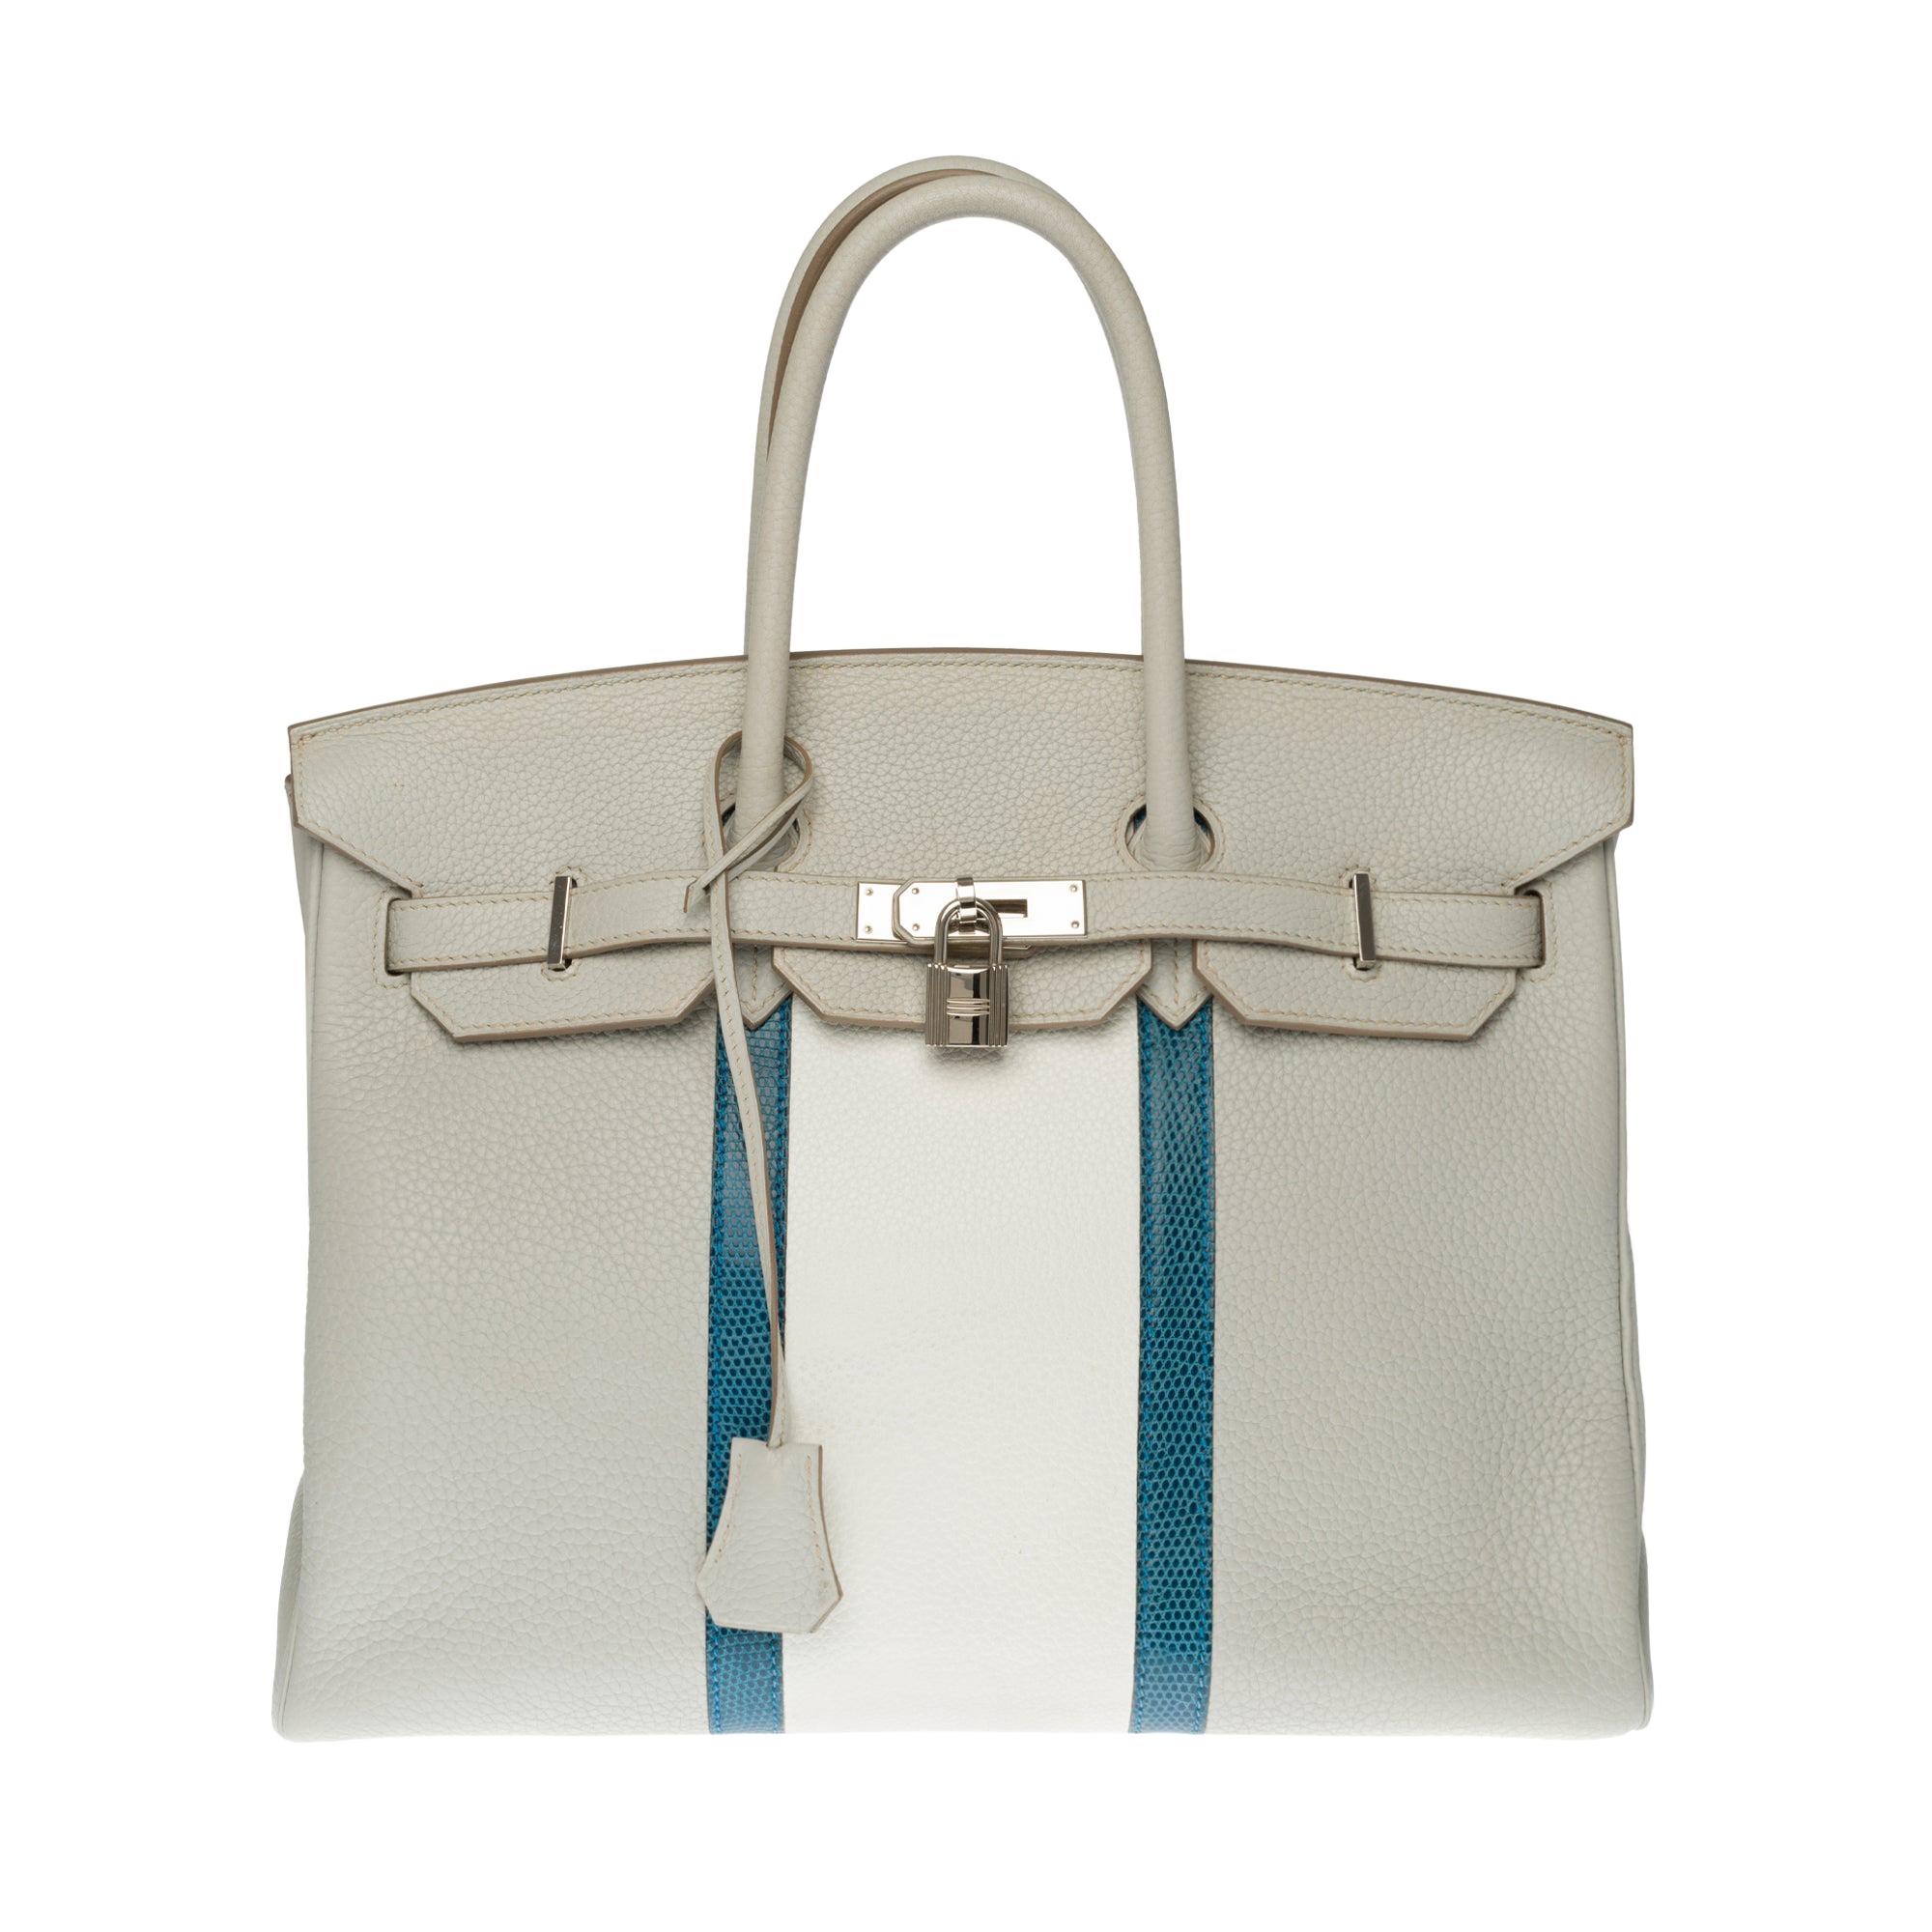 Rare Hermès Birkin Club 35 handbag in grey, white leather and blue lizard, SHW